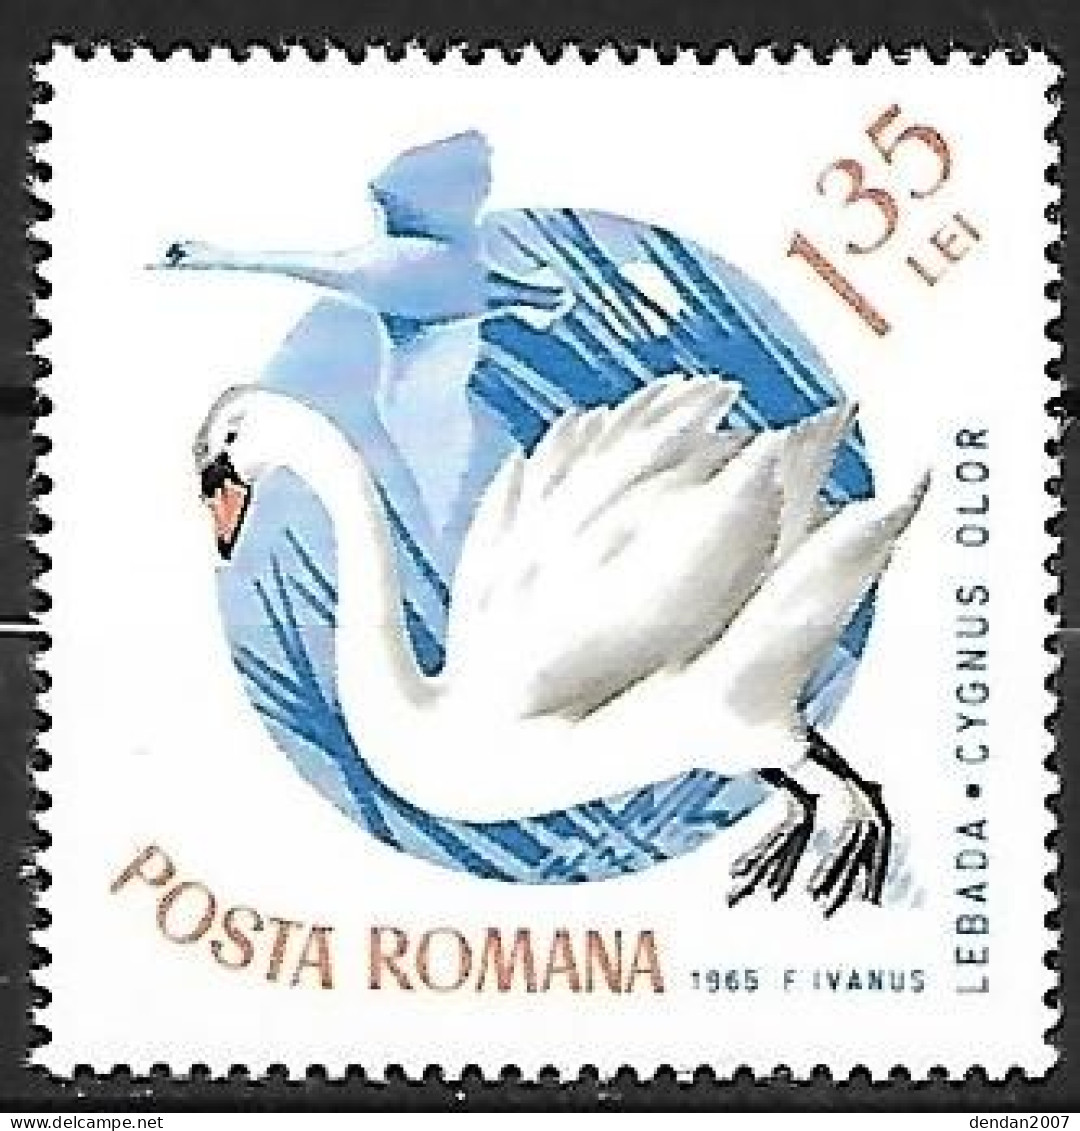 Rumania - MNH ** 1965 :     Mute Swan  -  Cygnus Olor - Swans